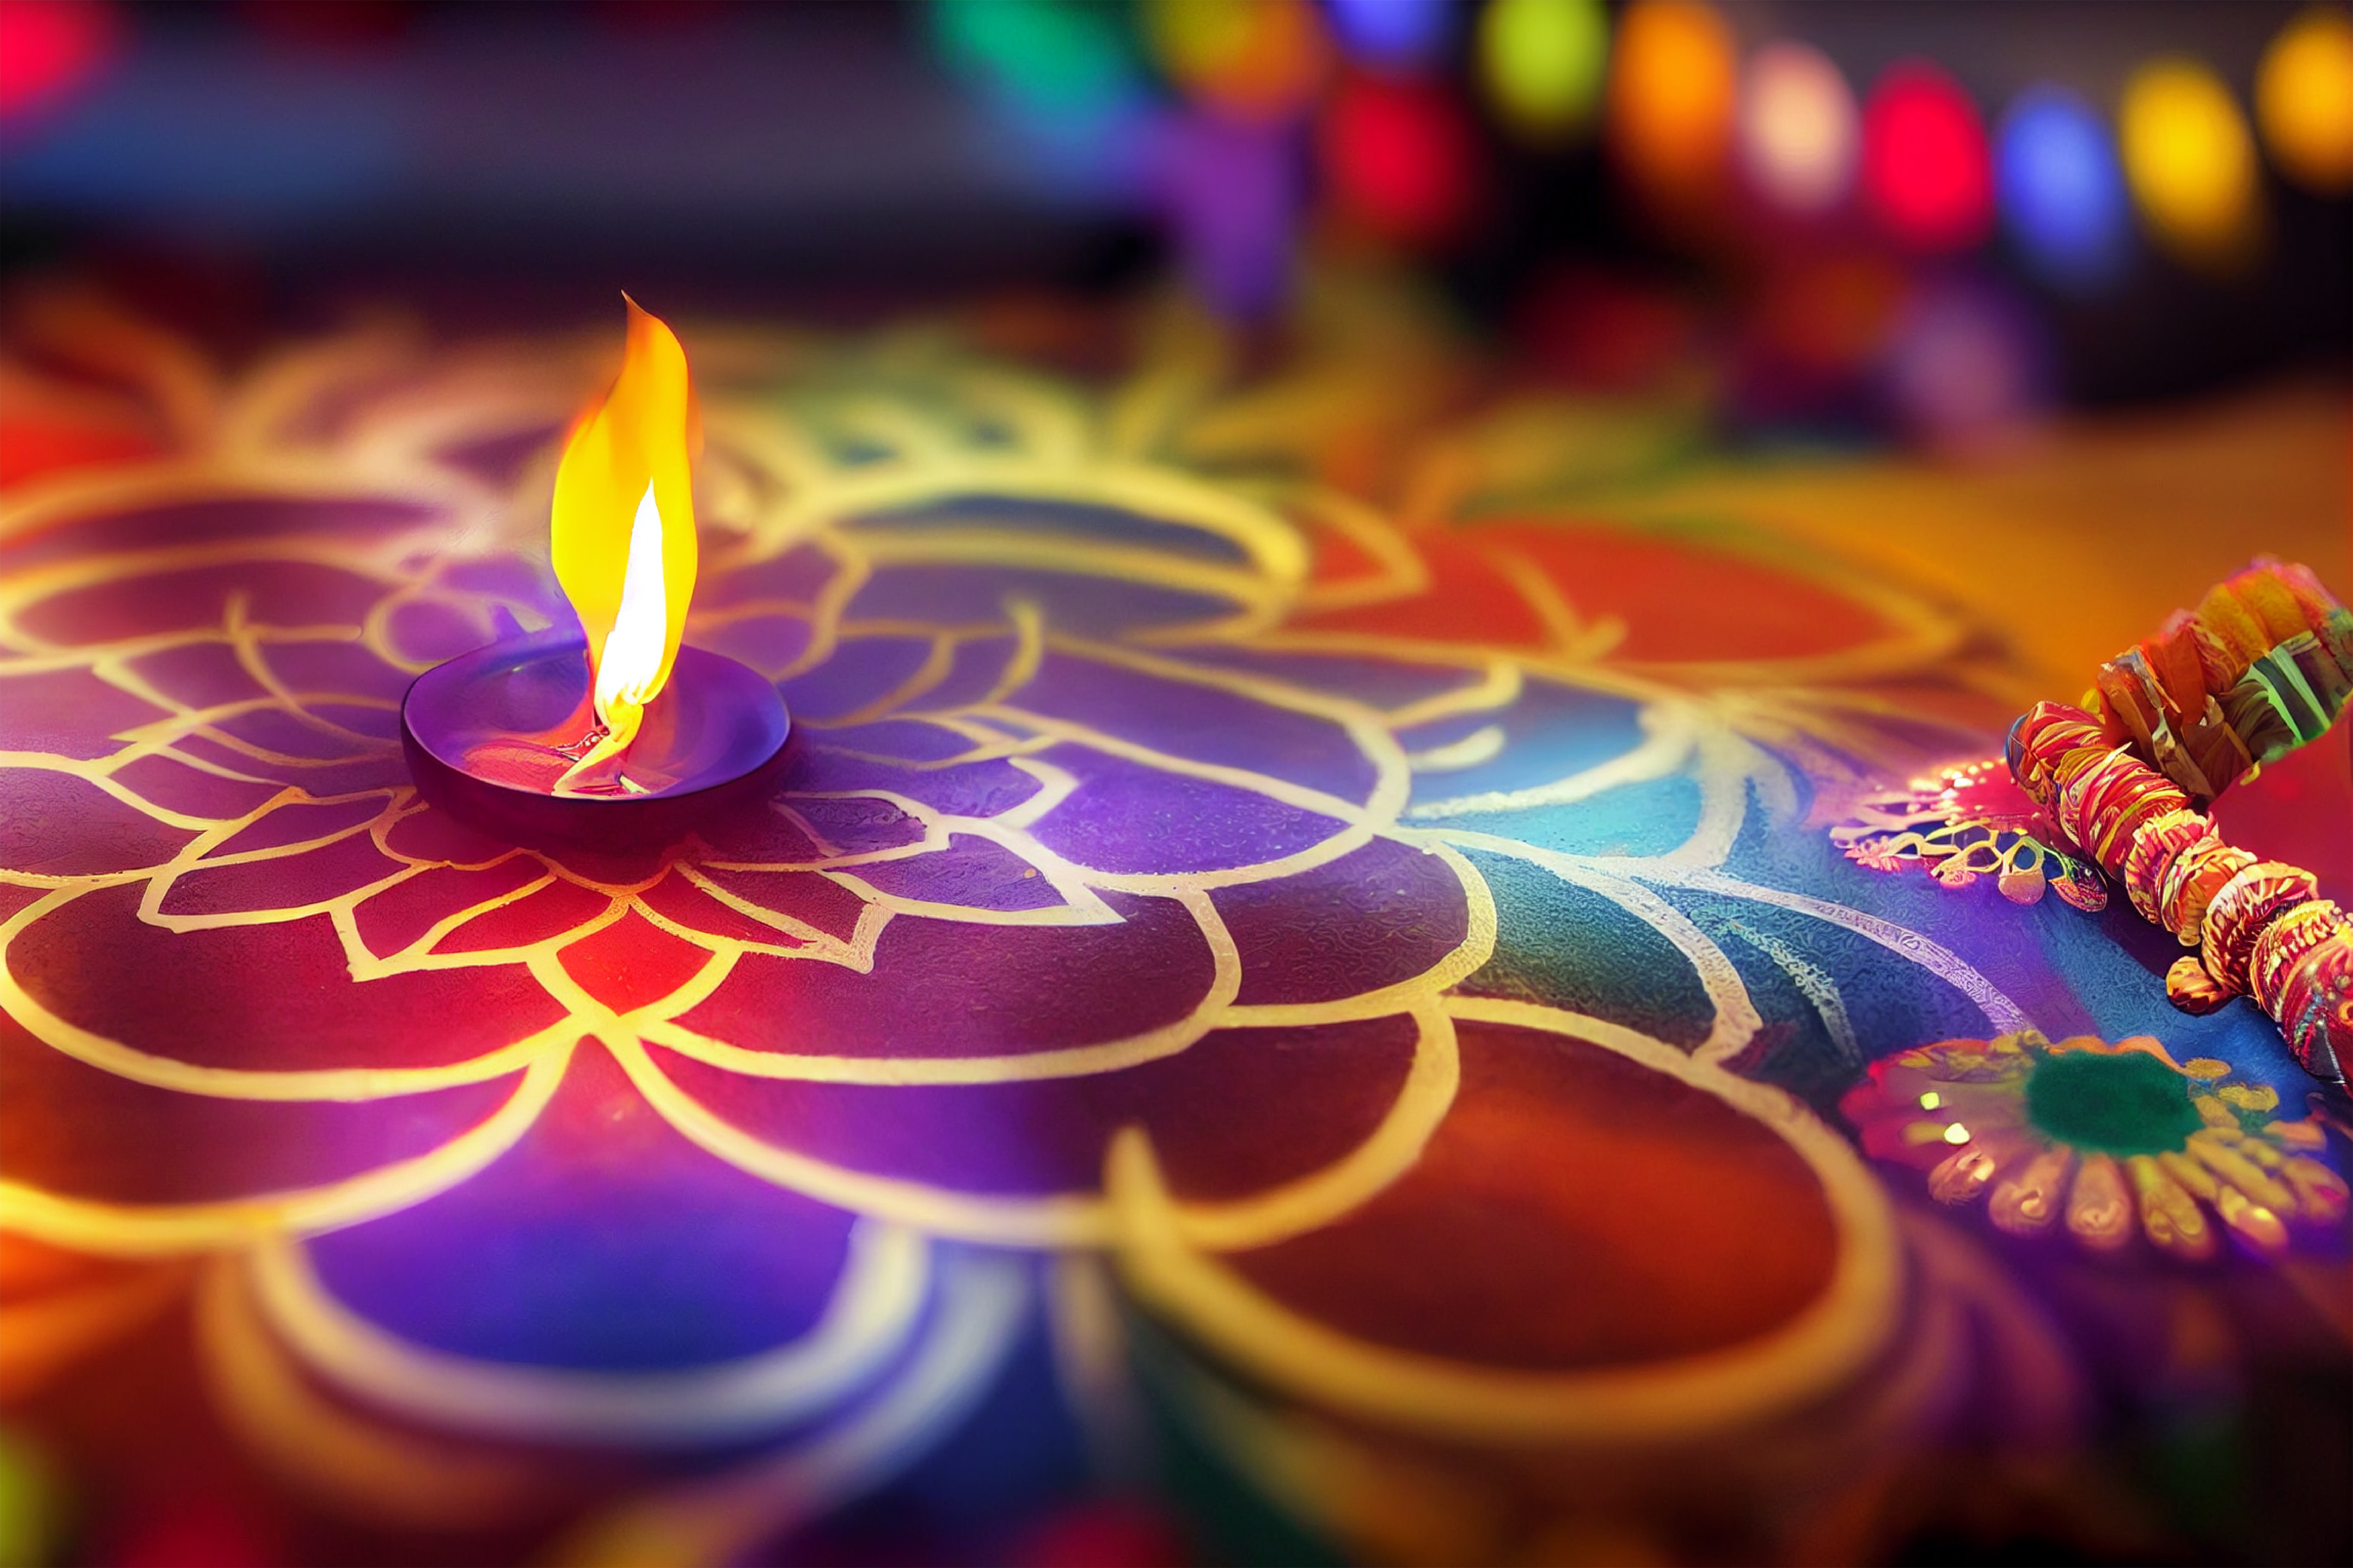 Free Diwali Diya Background with Colorful Rangoli Design